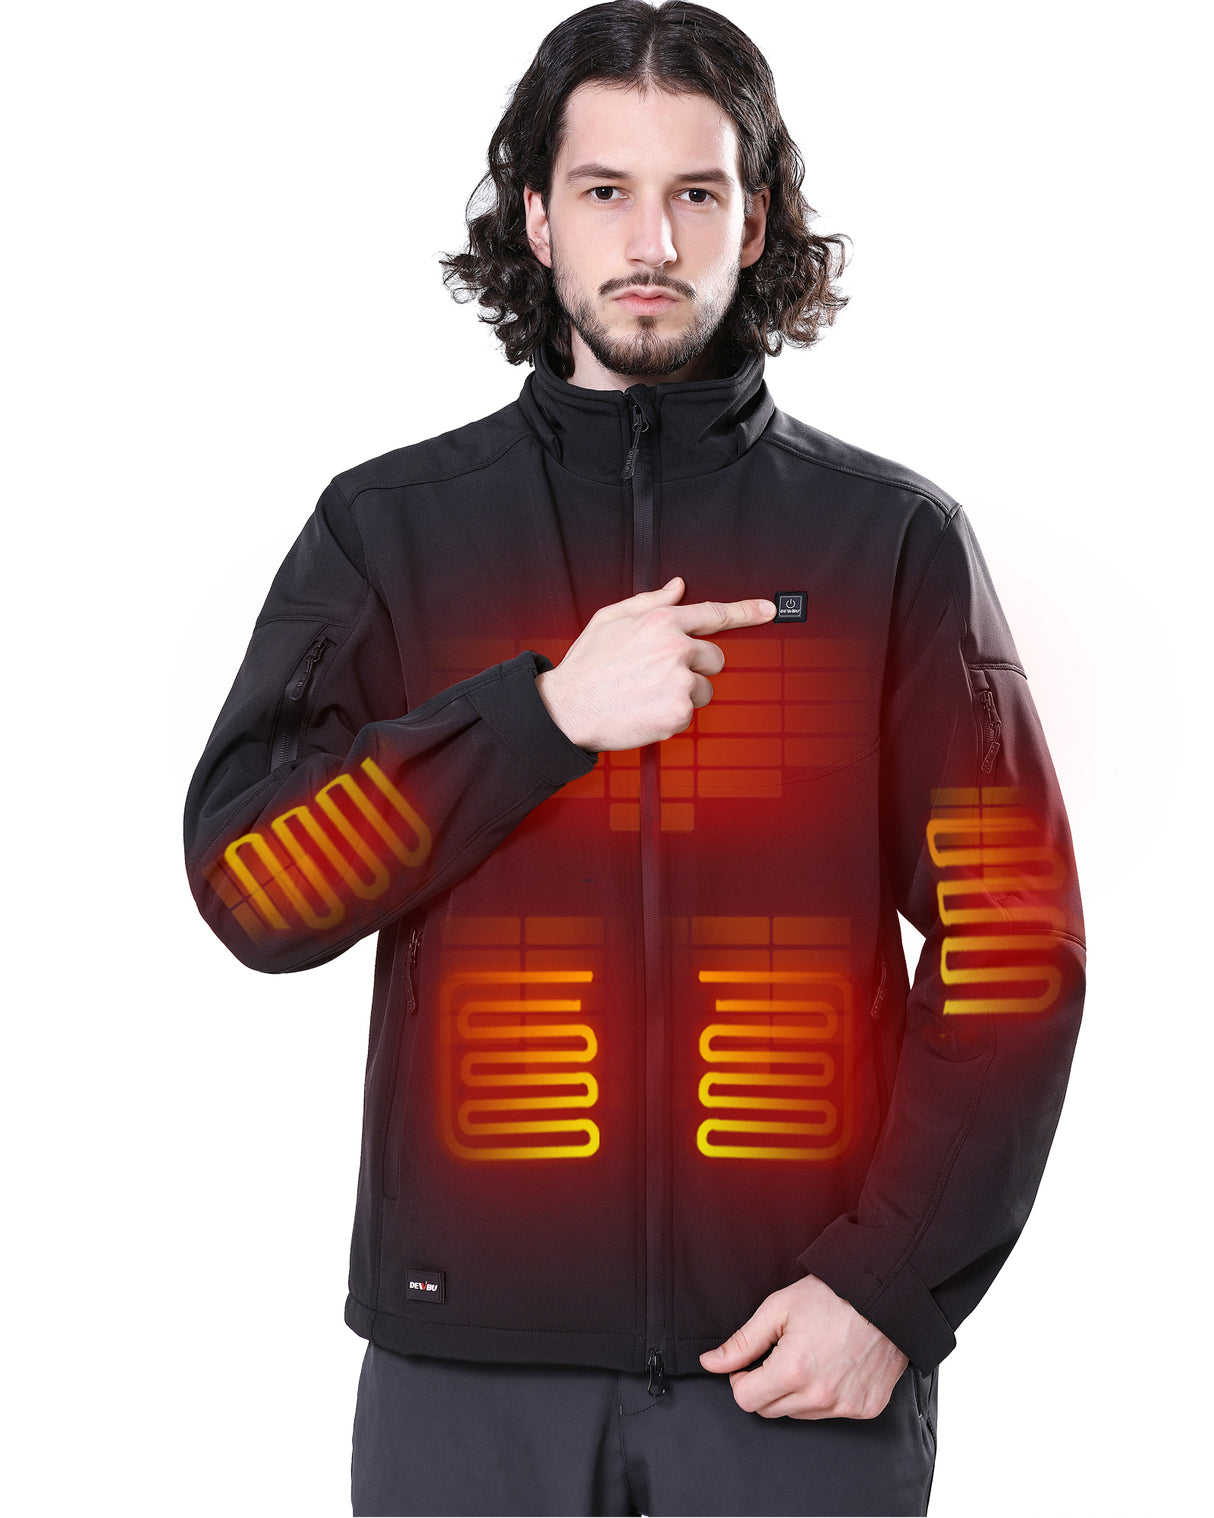 Men's Heated Jacket Detachable Hood With 12V Battery Pack - Black